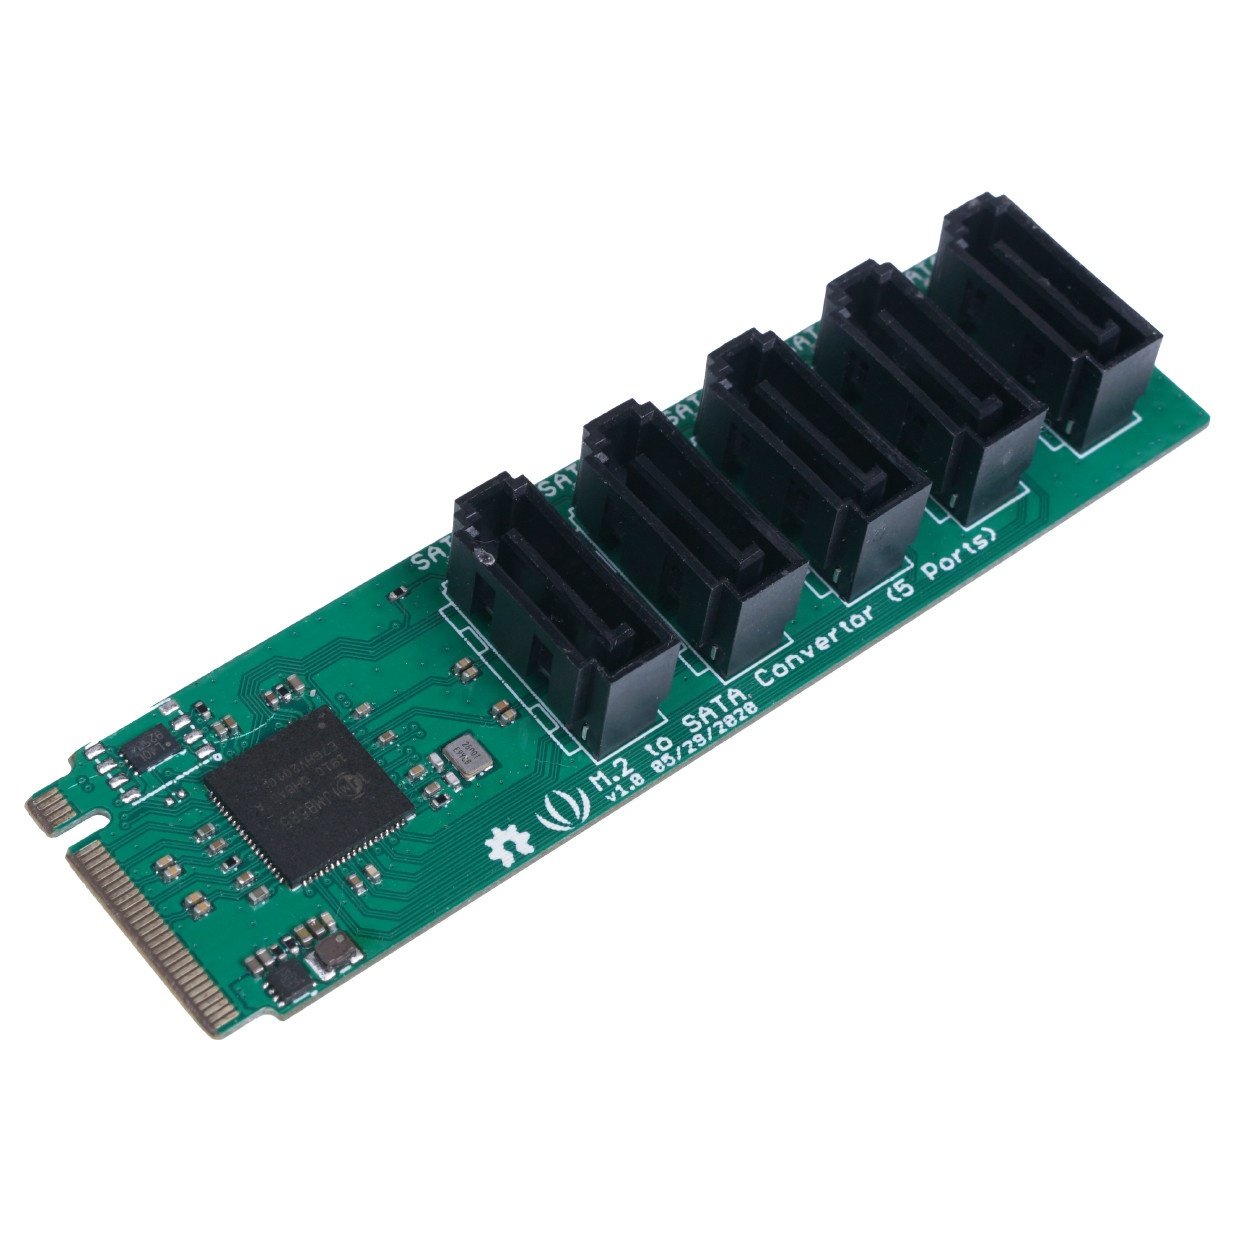 PCIe 3.0x2 M.2 NGFF Key B zu SATA 3.0 6 Gb/s Konverter - 5